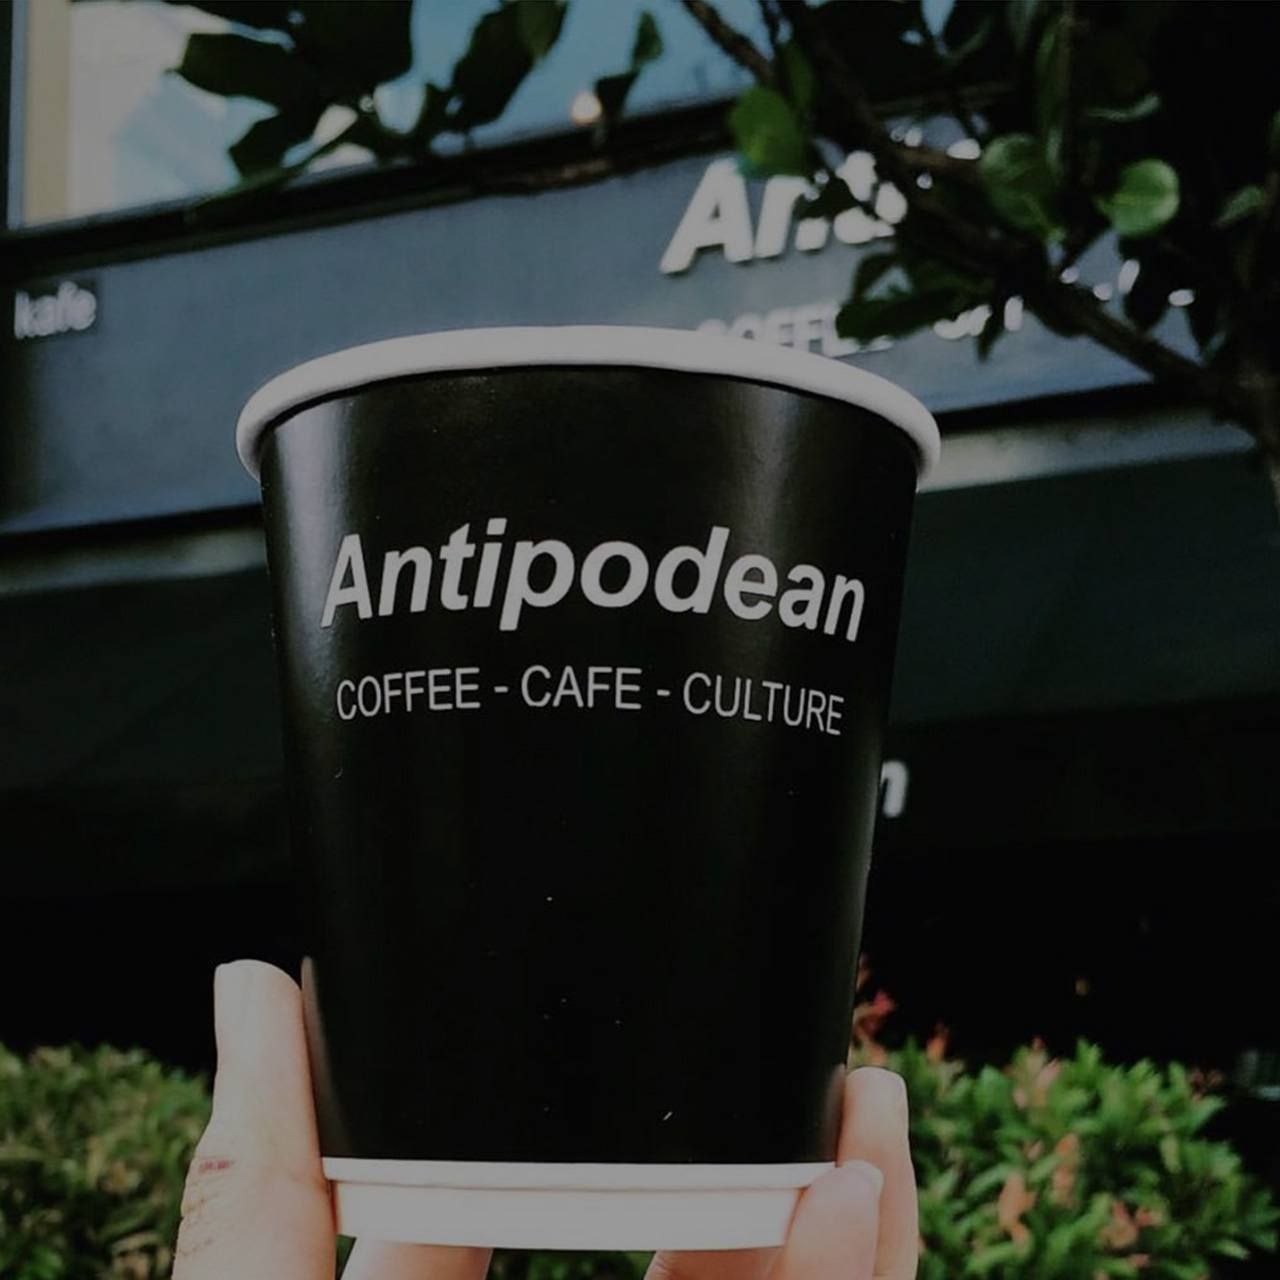 Antipodean coffee